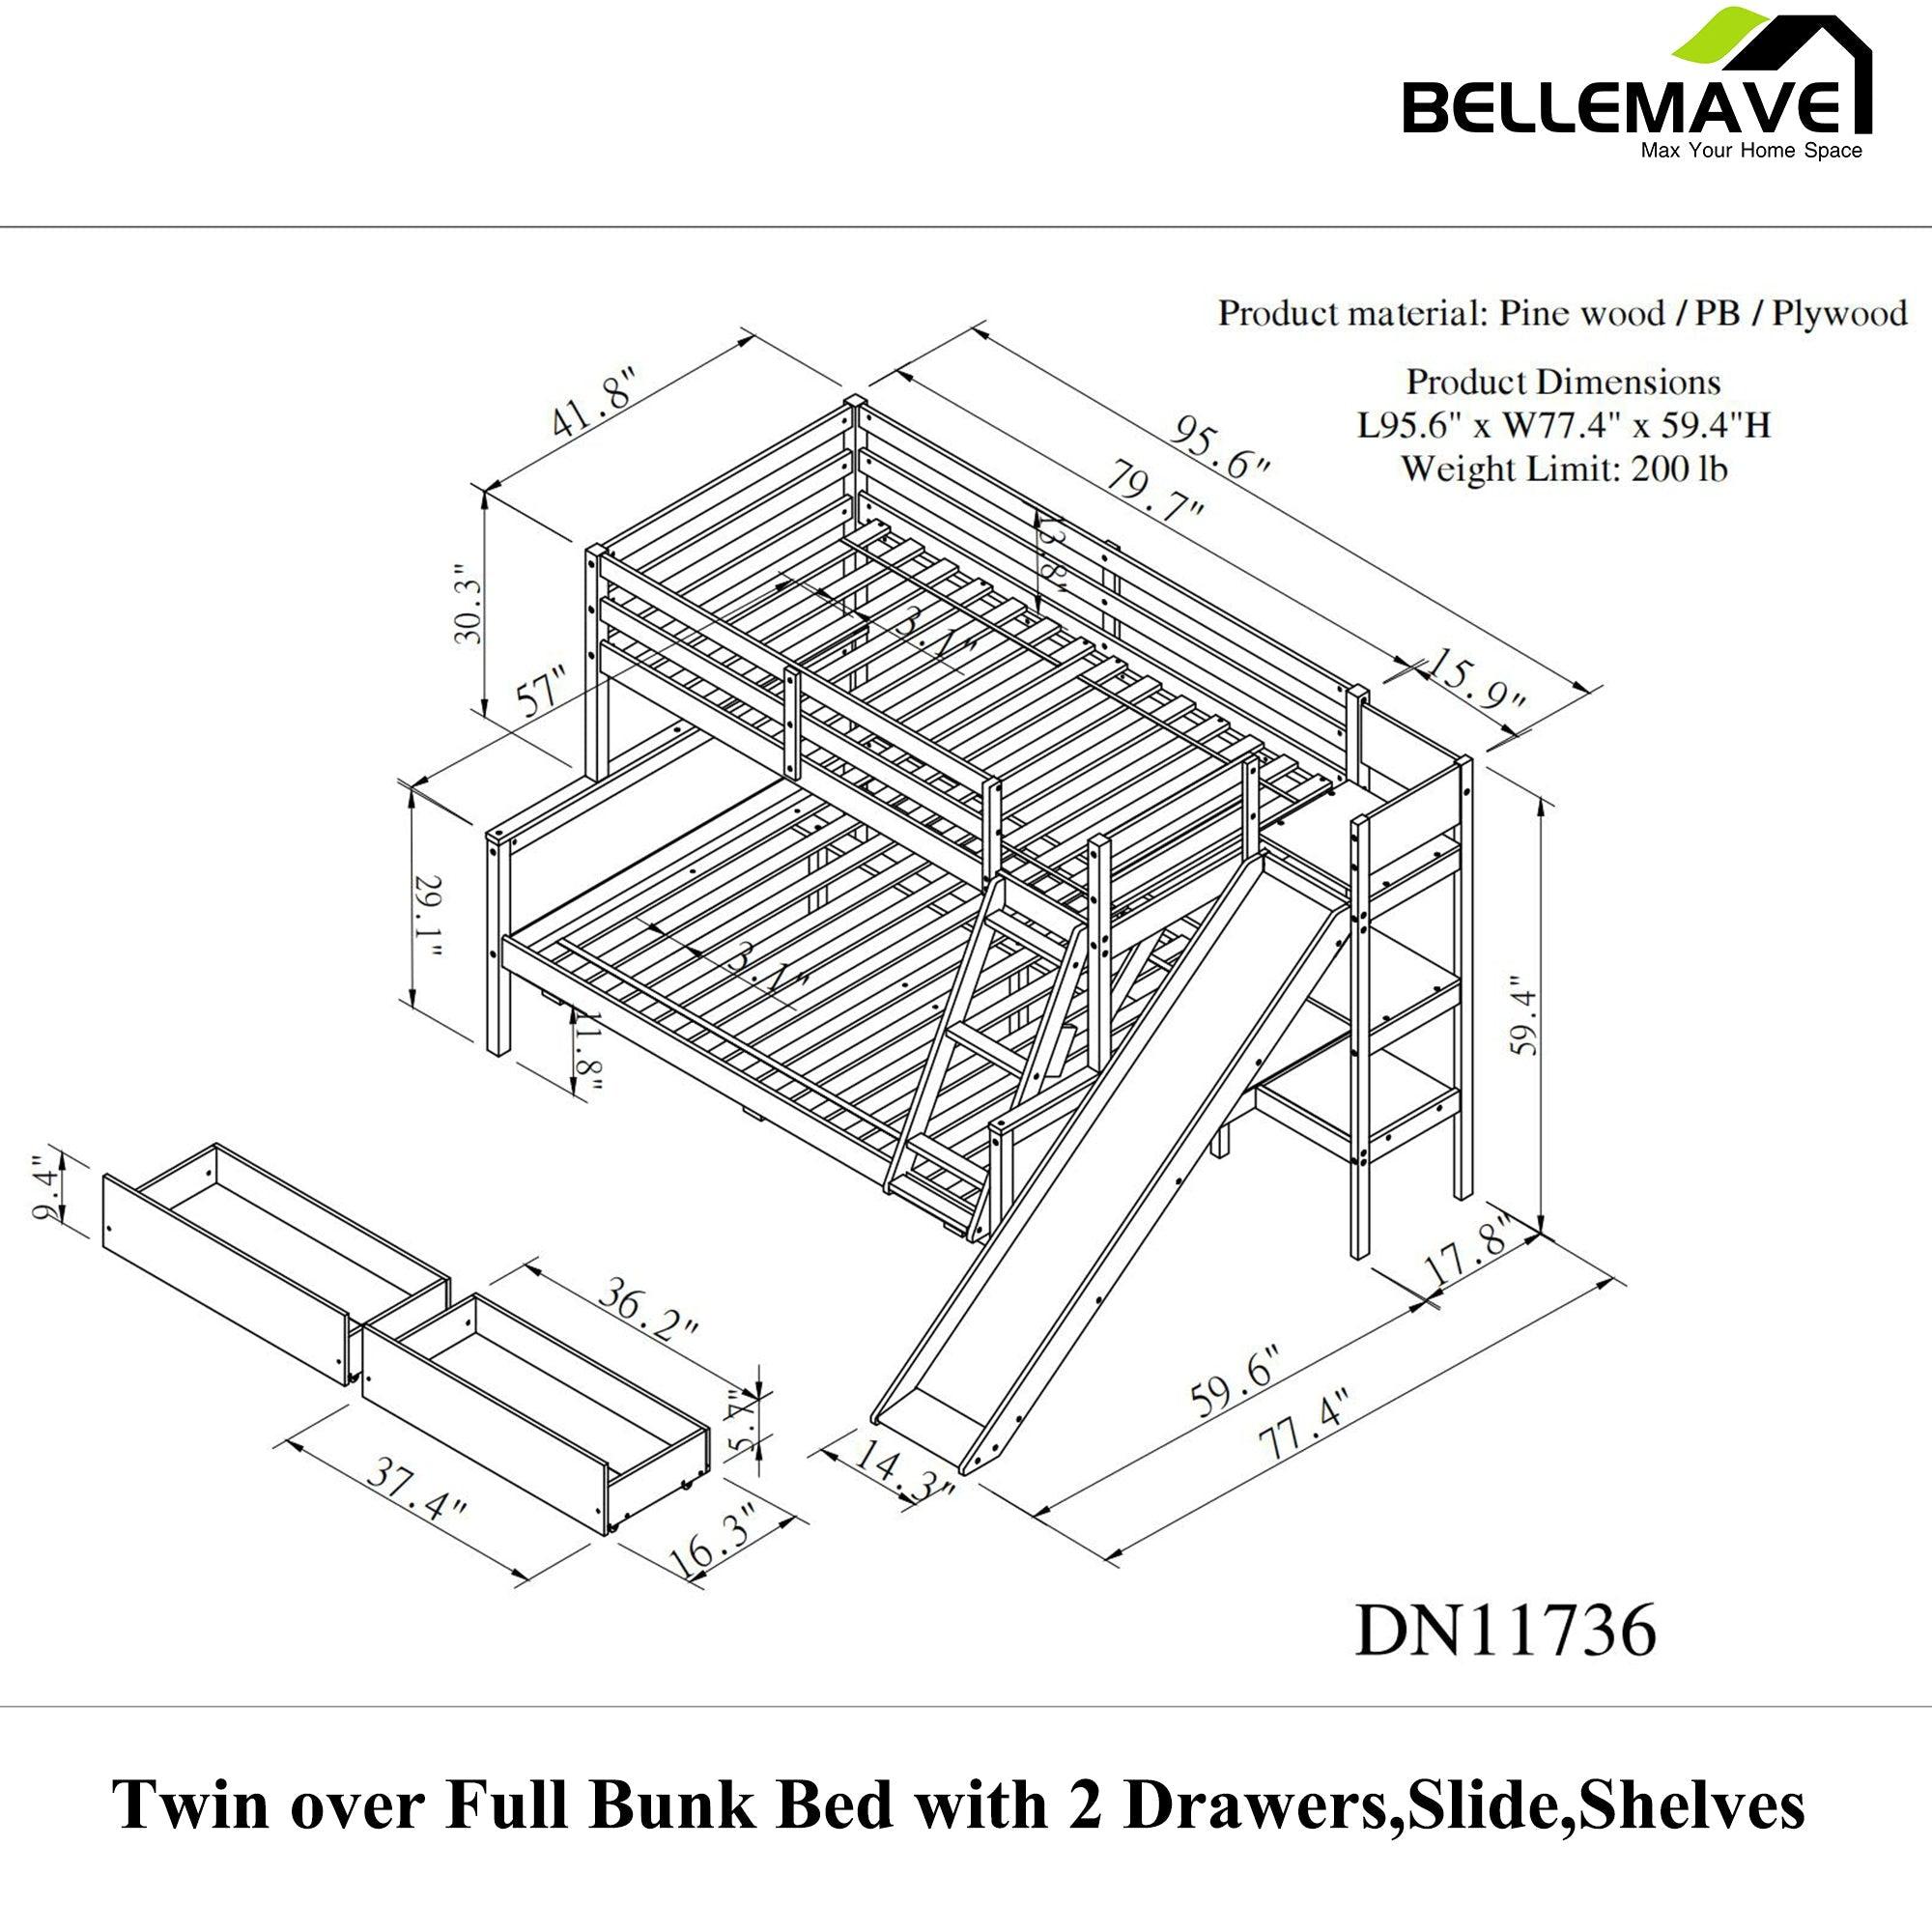 Bellemave Twin over Full Bunk Bed - Bellemave